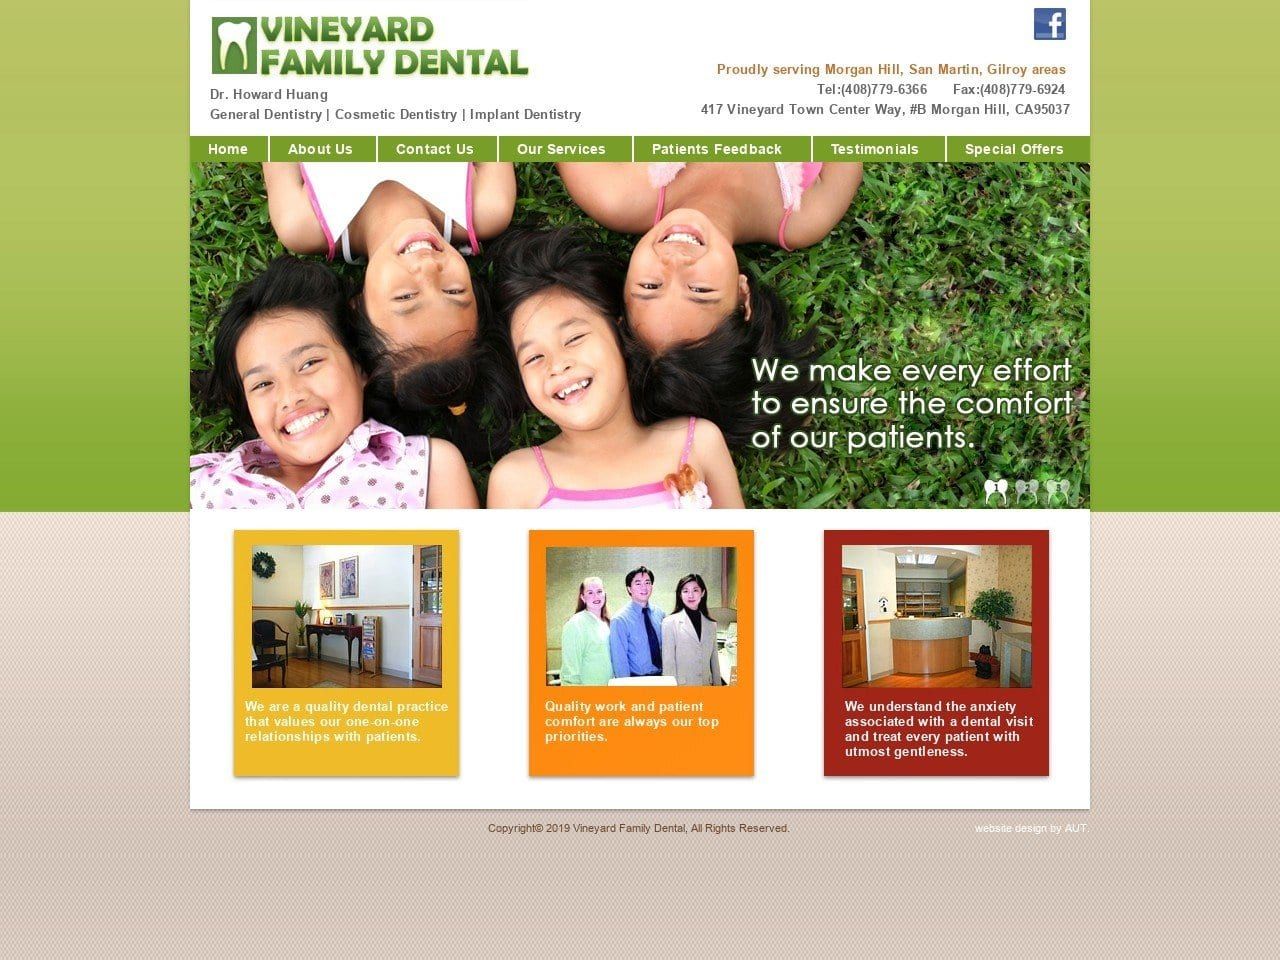 Vineyard Dental Website Screenshot from vineyarddental.com